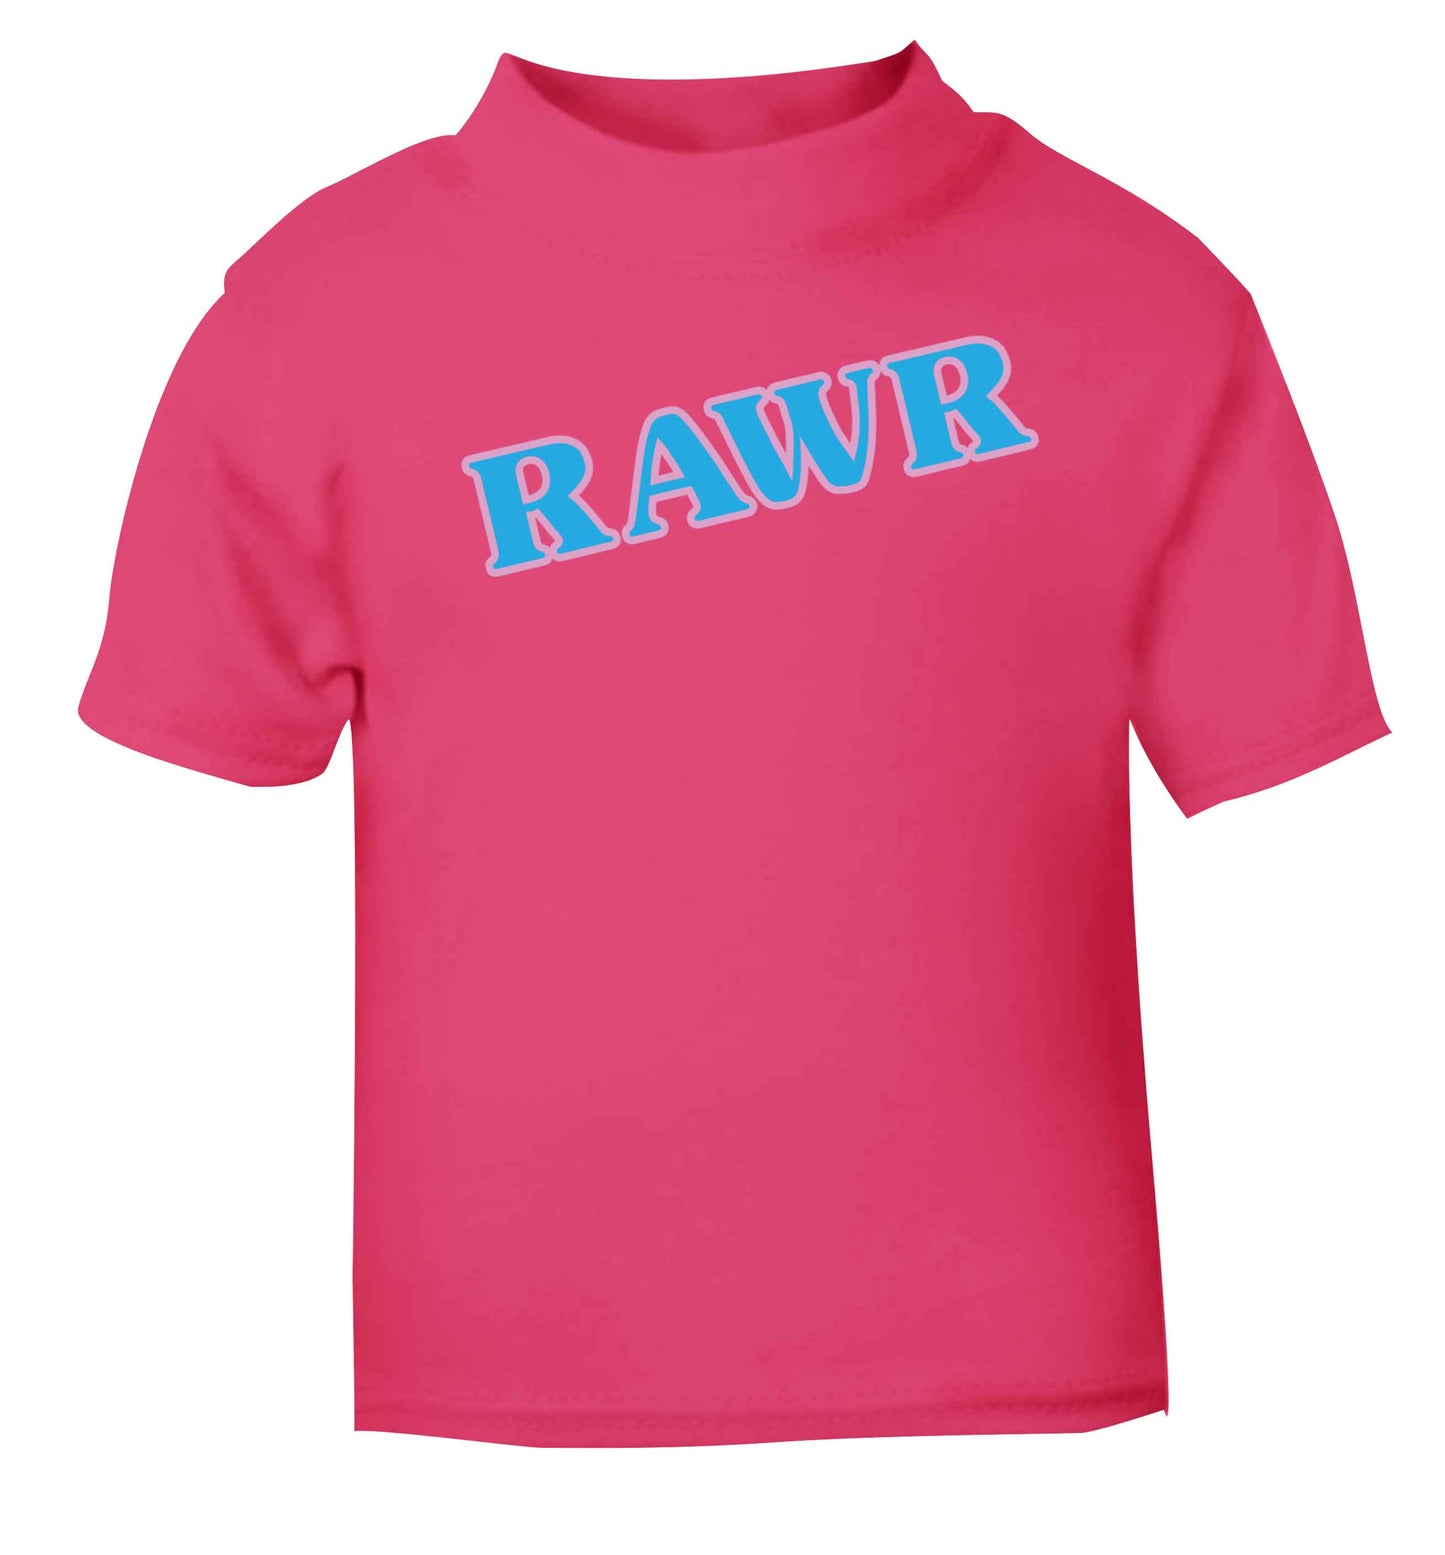 Rawr pink baby toddler Tshirt 2 Years